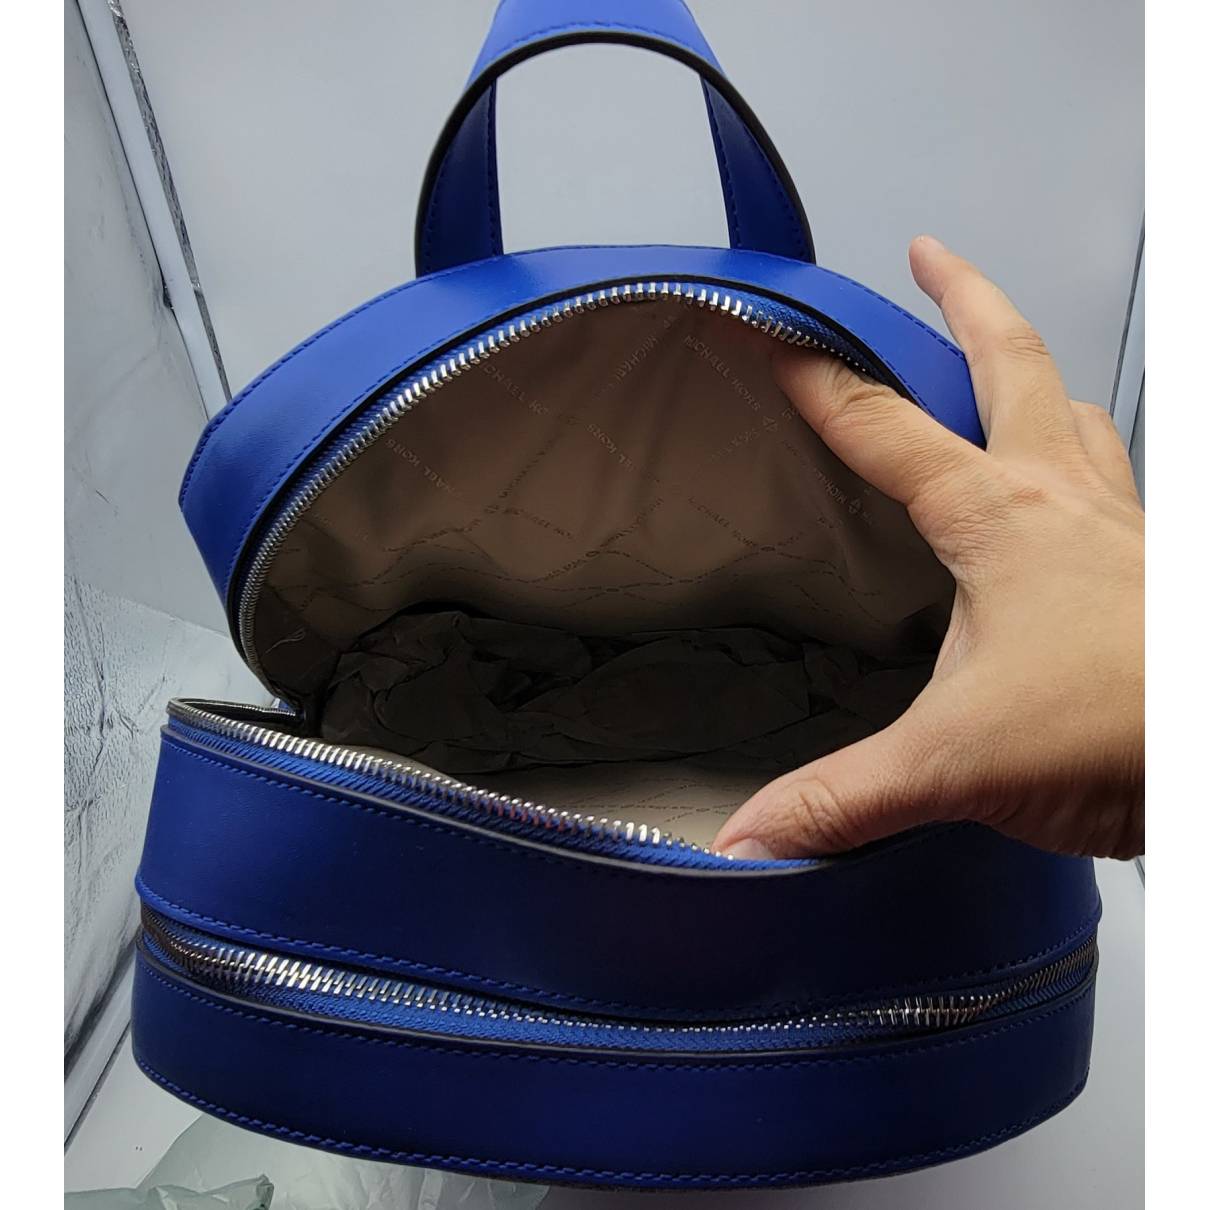 Backpack Michael Kors Blue in Polyester - 29606148